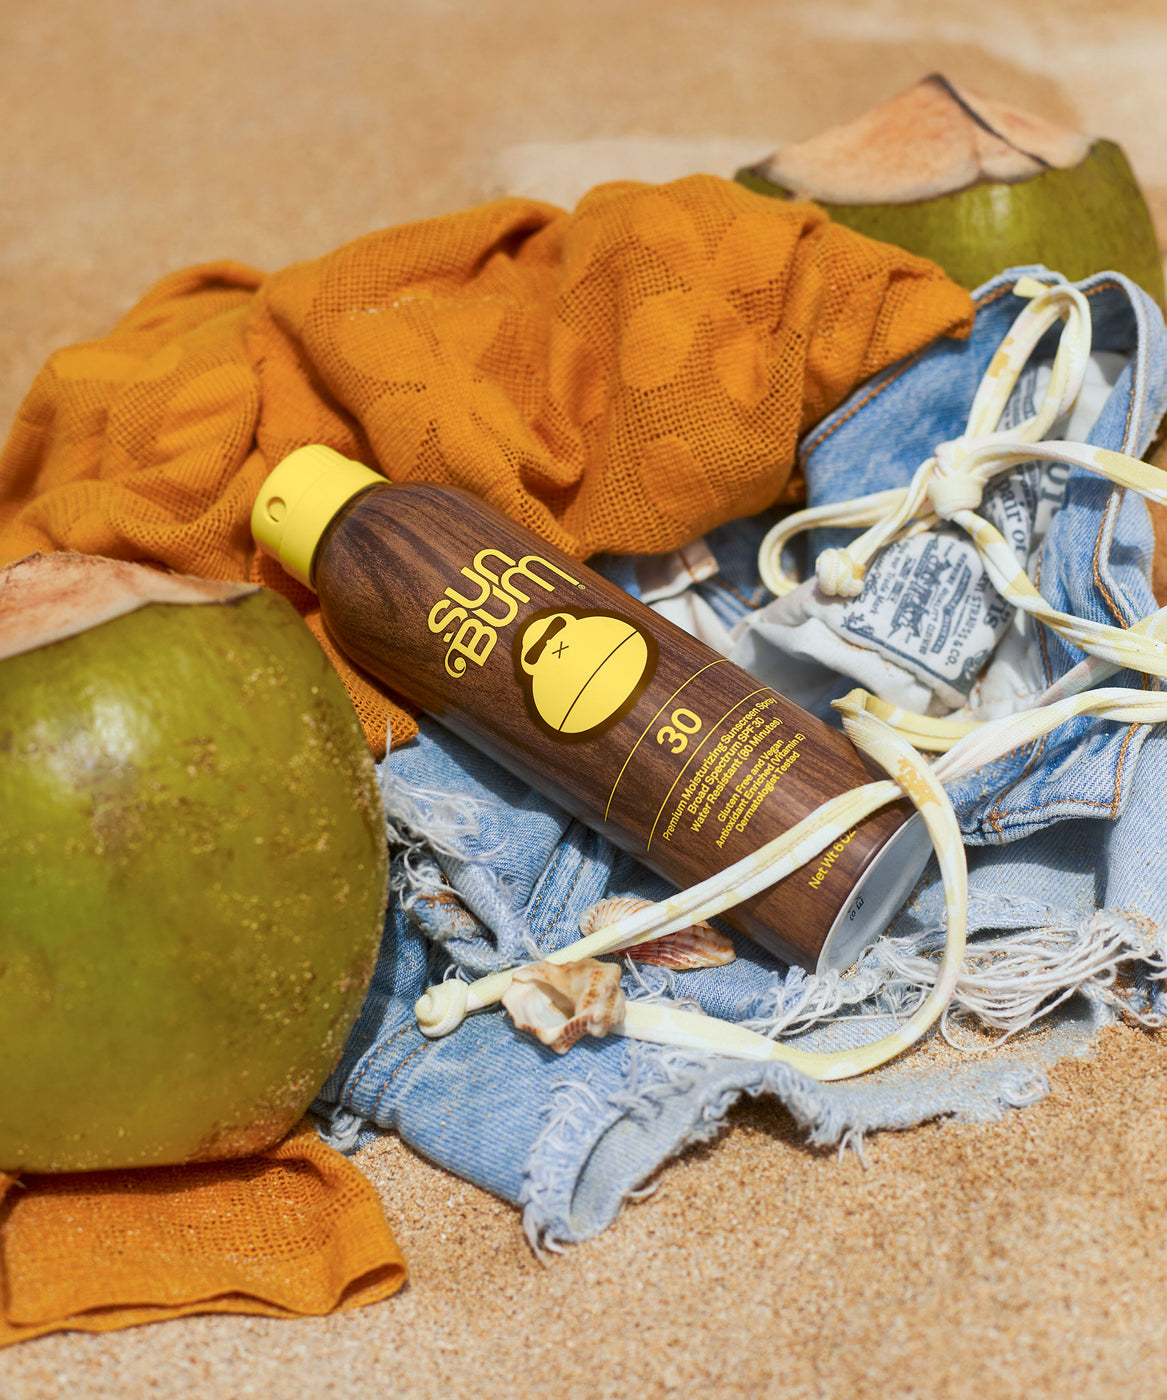 Sun Bum Original SPF 30 Sunscreen Spray – Sylvia's Sport & Resort